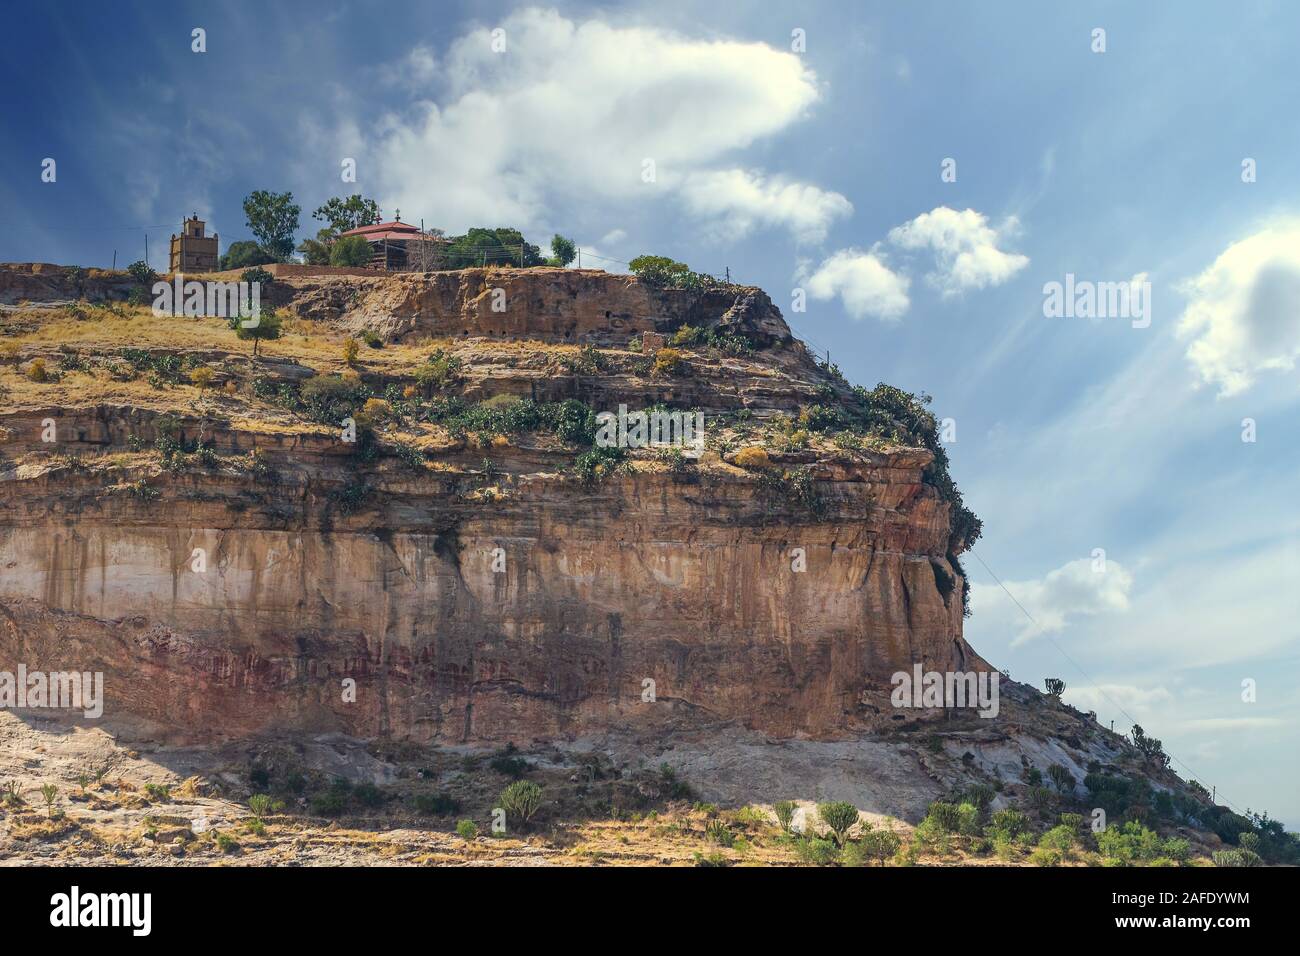 Ethiopian Debre Damo Monastery in Tigrai region, Ethiopia. Stock Photo